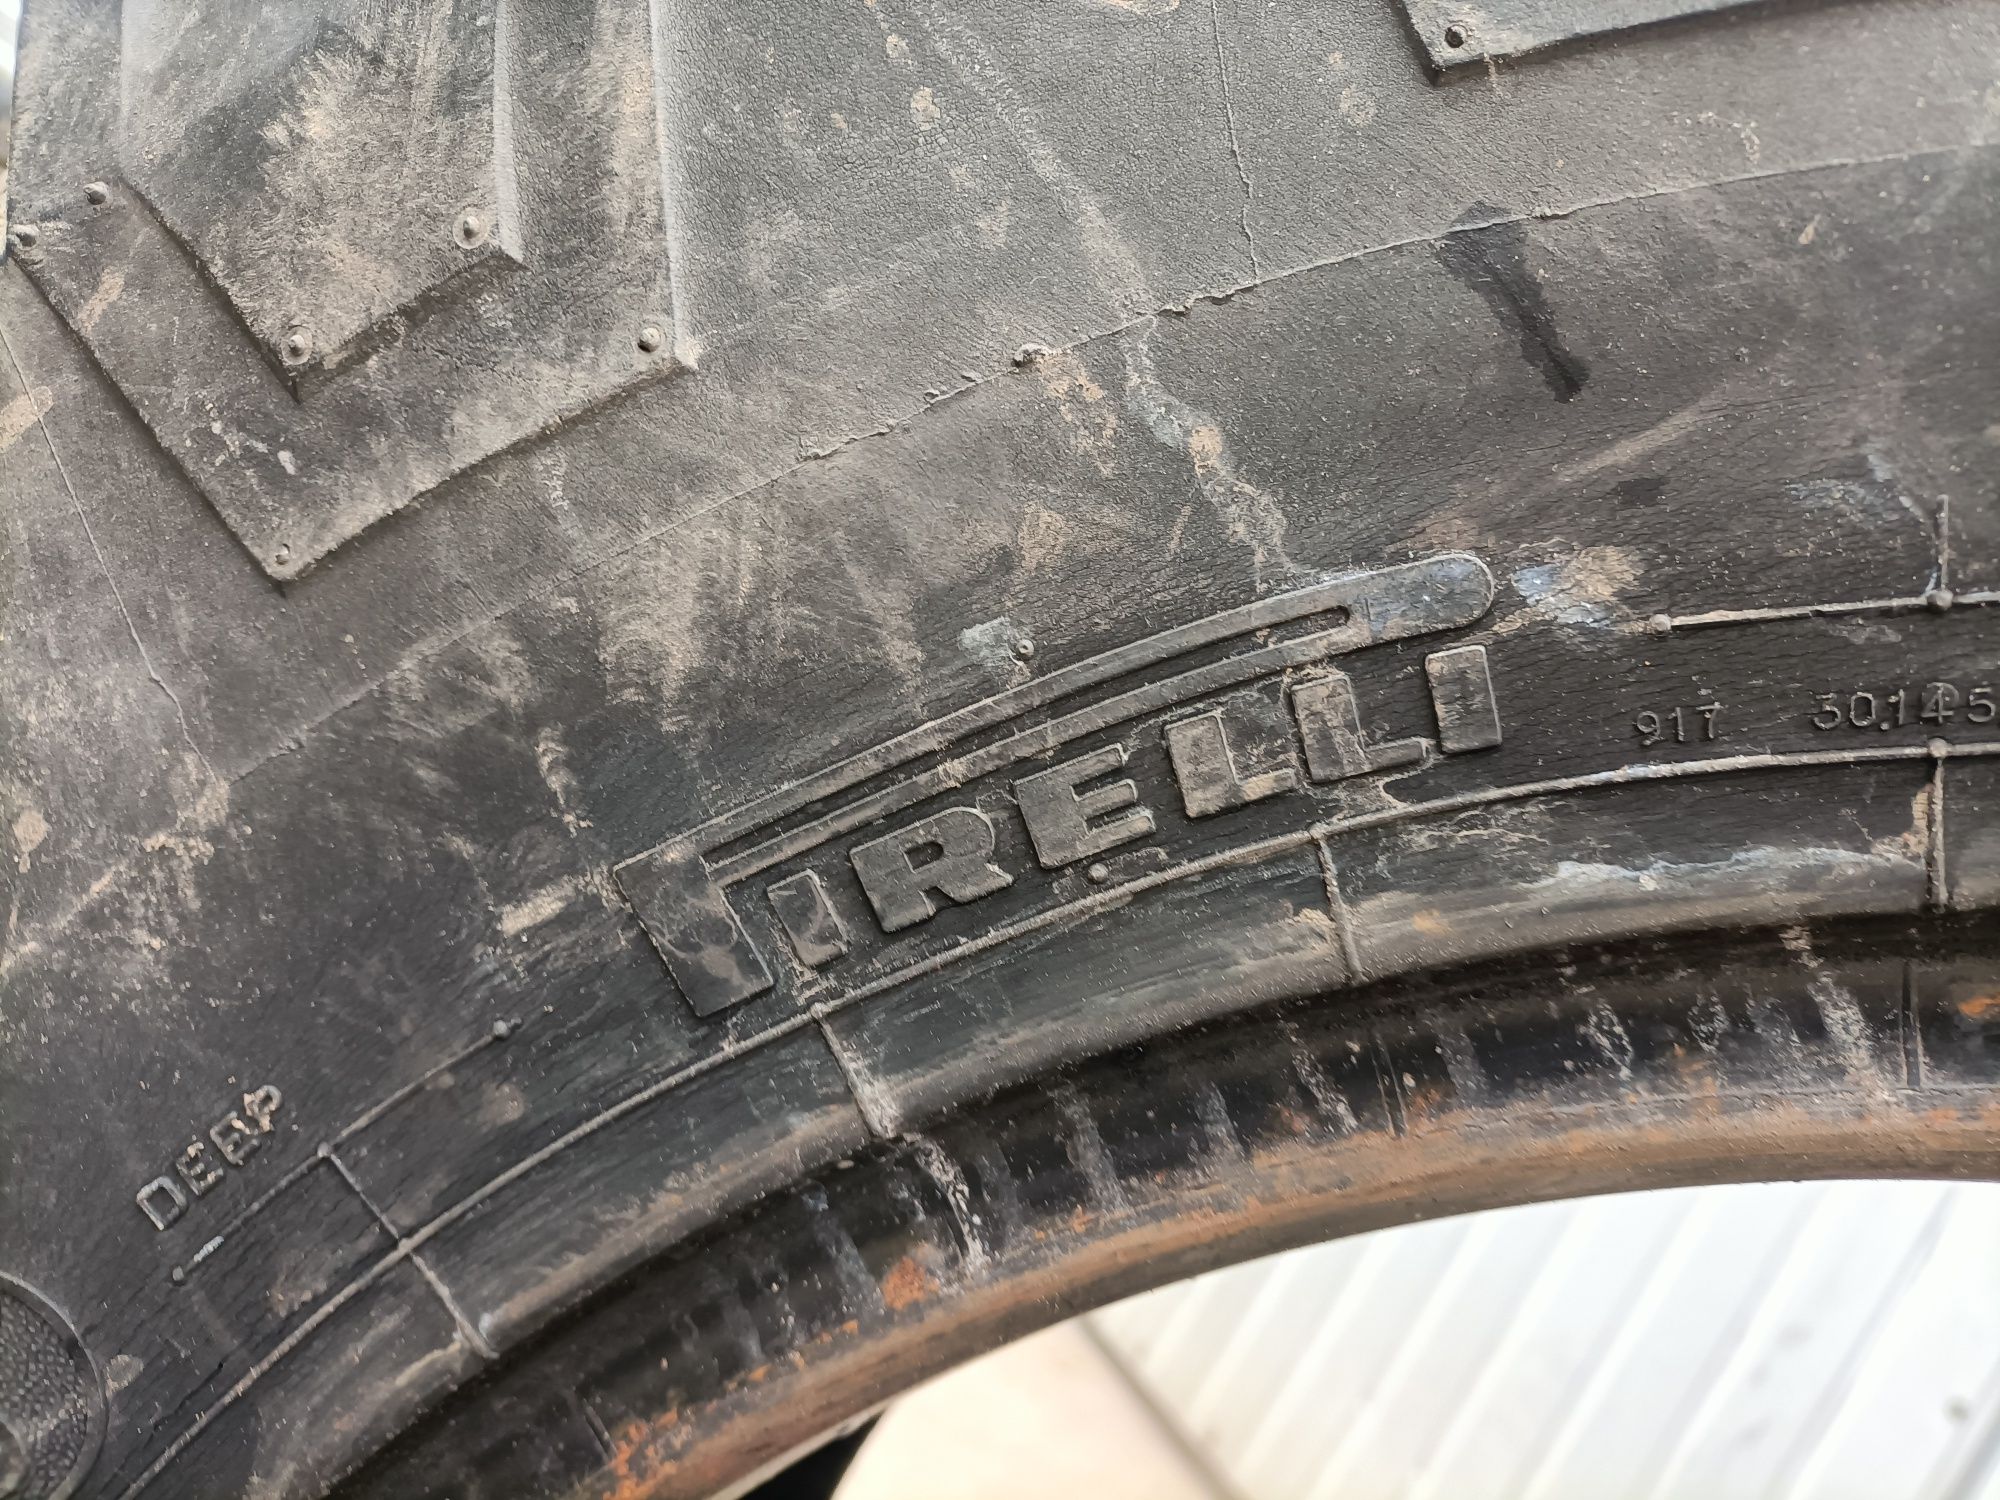 380/70/20 Pirelli radial.